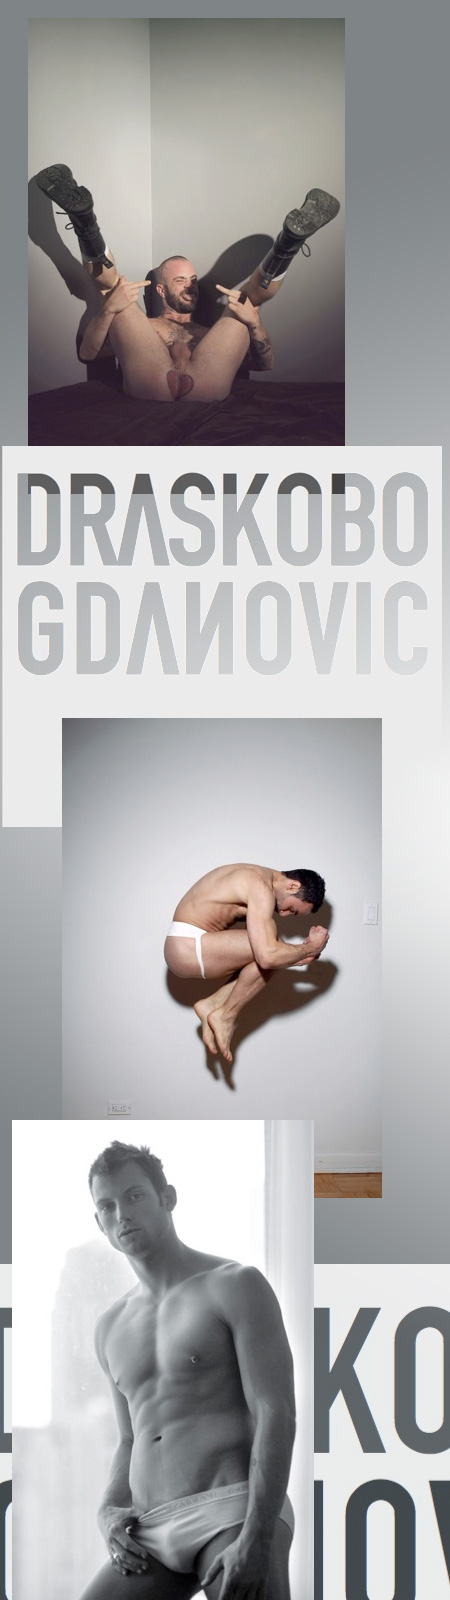 Drasko Bogdanovic Male Erotic Photography